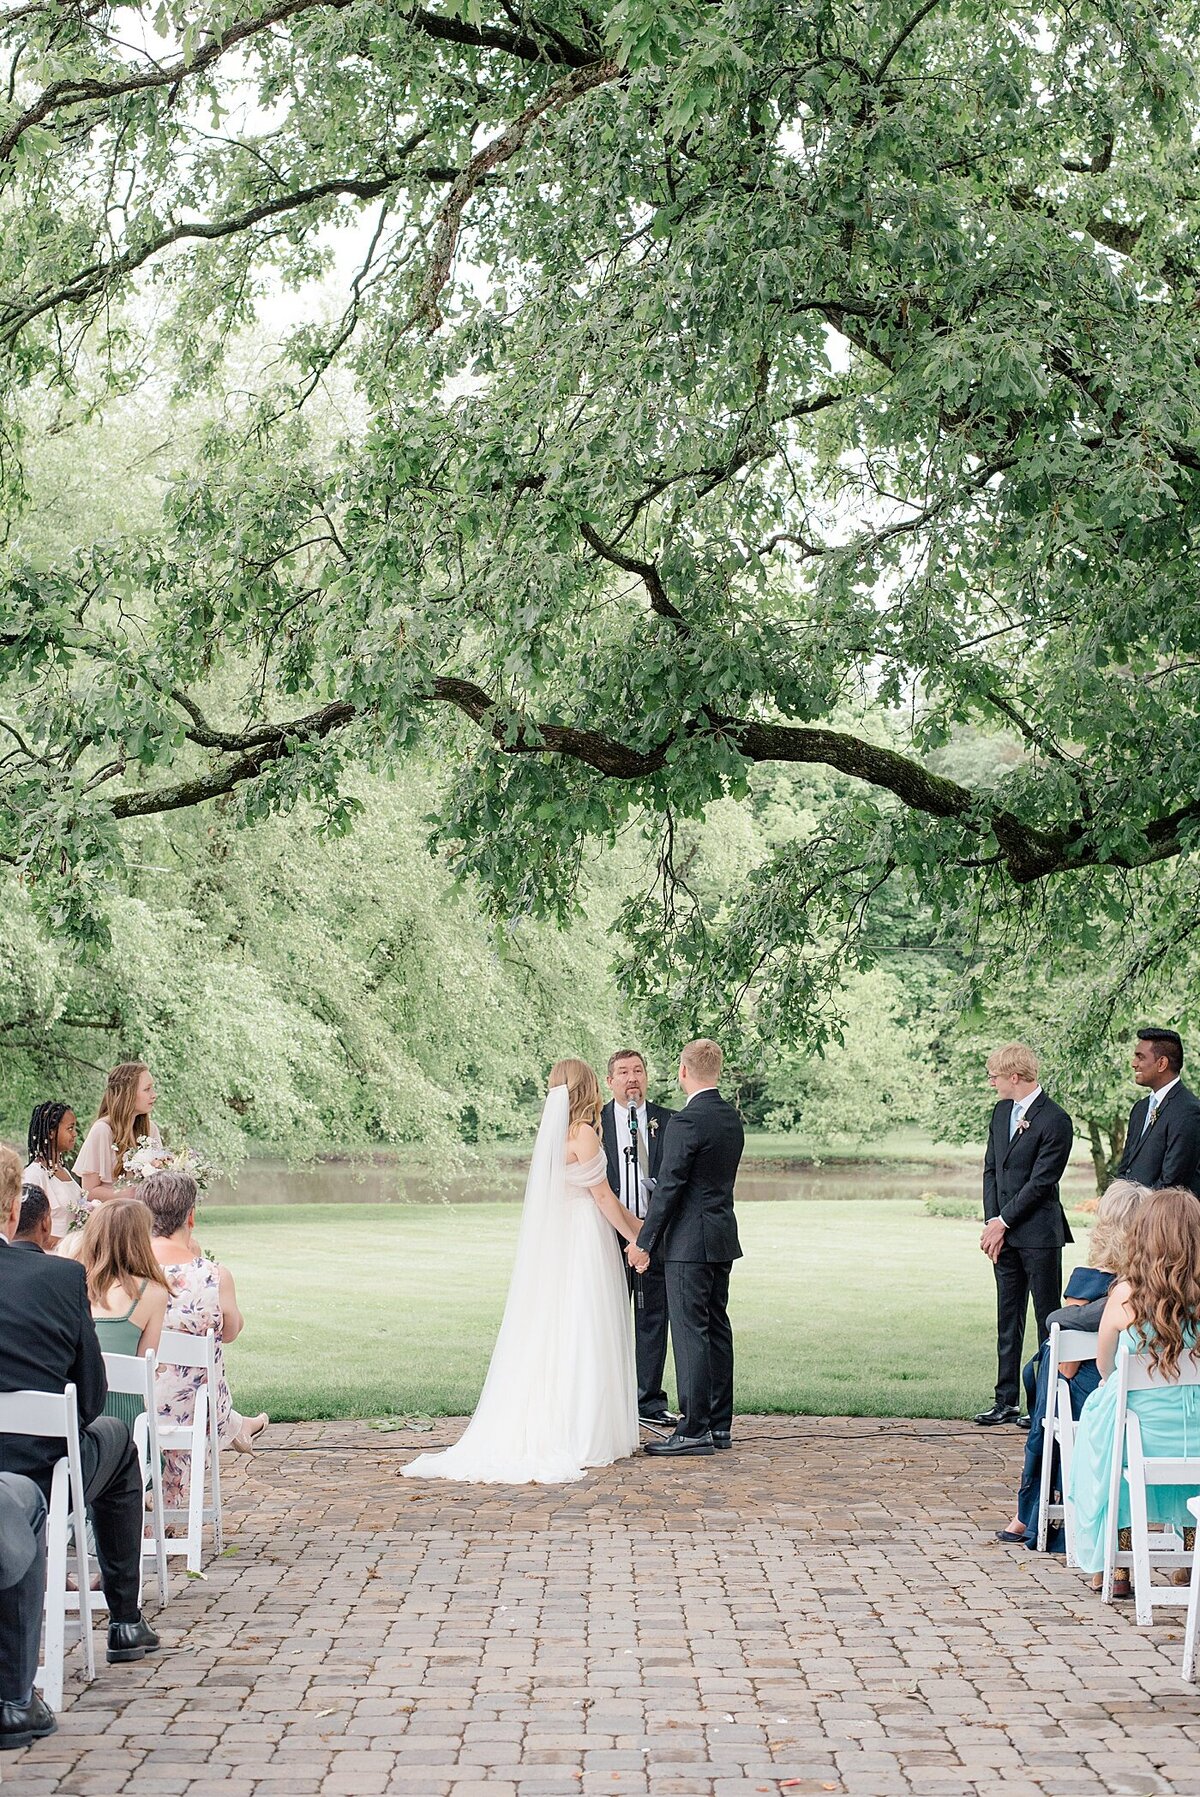 Outdoor ceremony in ohio under oak tree